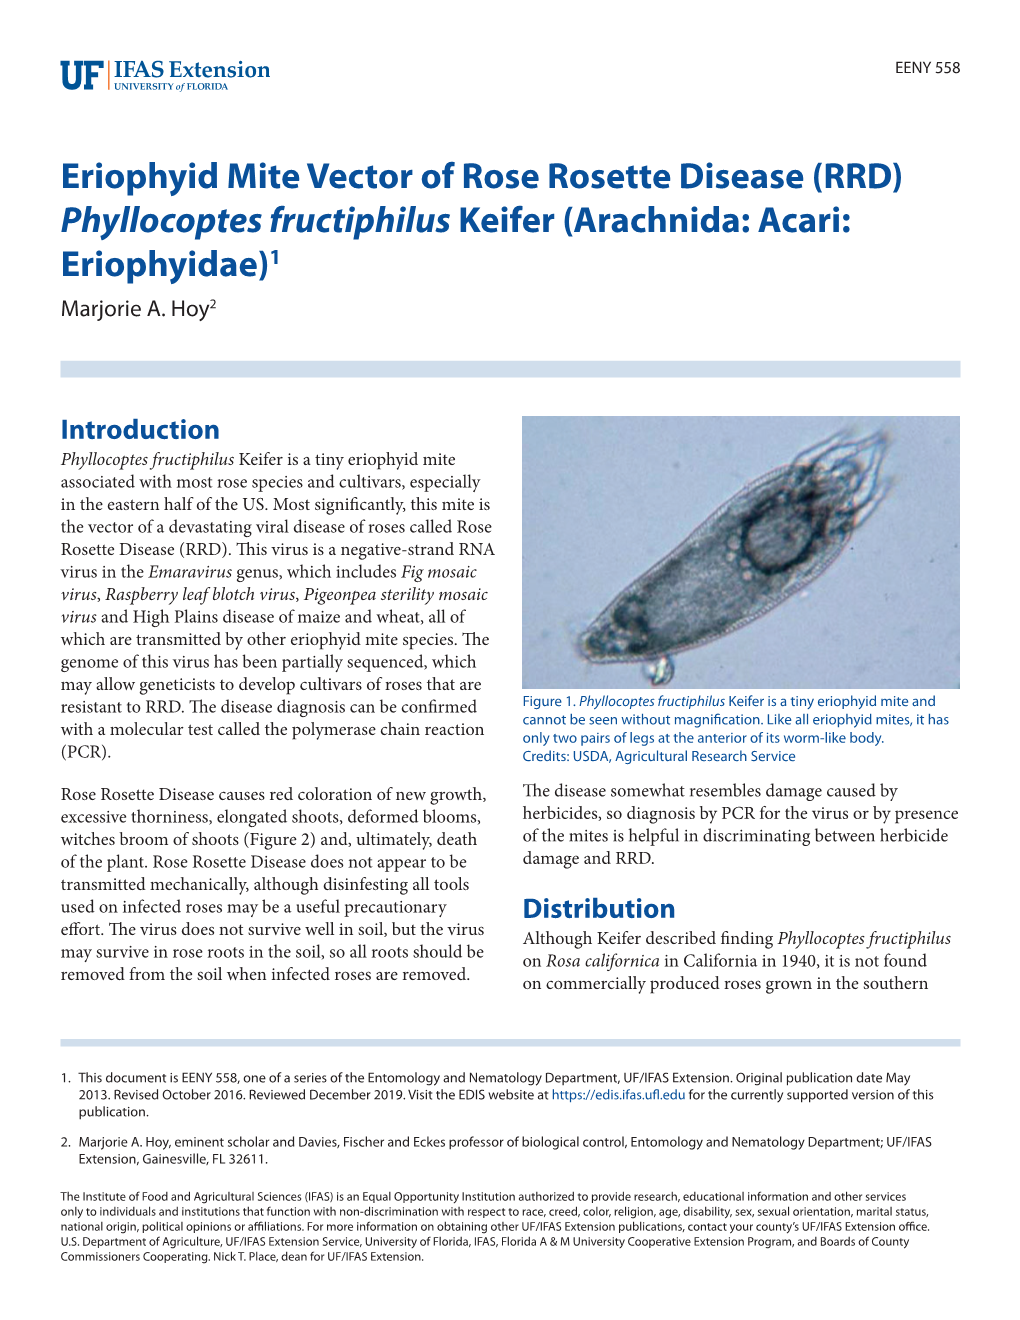 Eriophyid Mite Vector of Rose Rosette Disease (RRD) Phyllocoptes Fructiphilus Keifer (Arachnida: Acari: Eriophyidae)1 Marjorie A